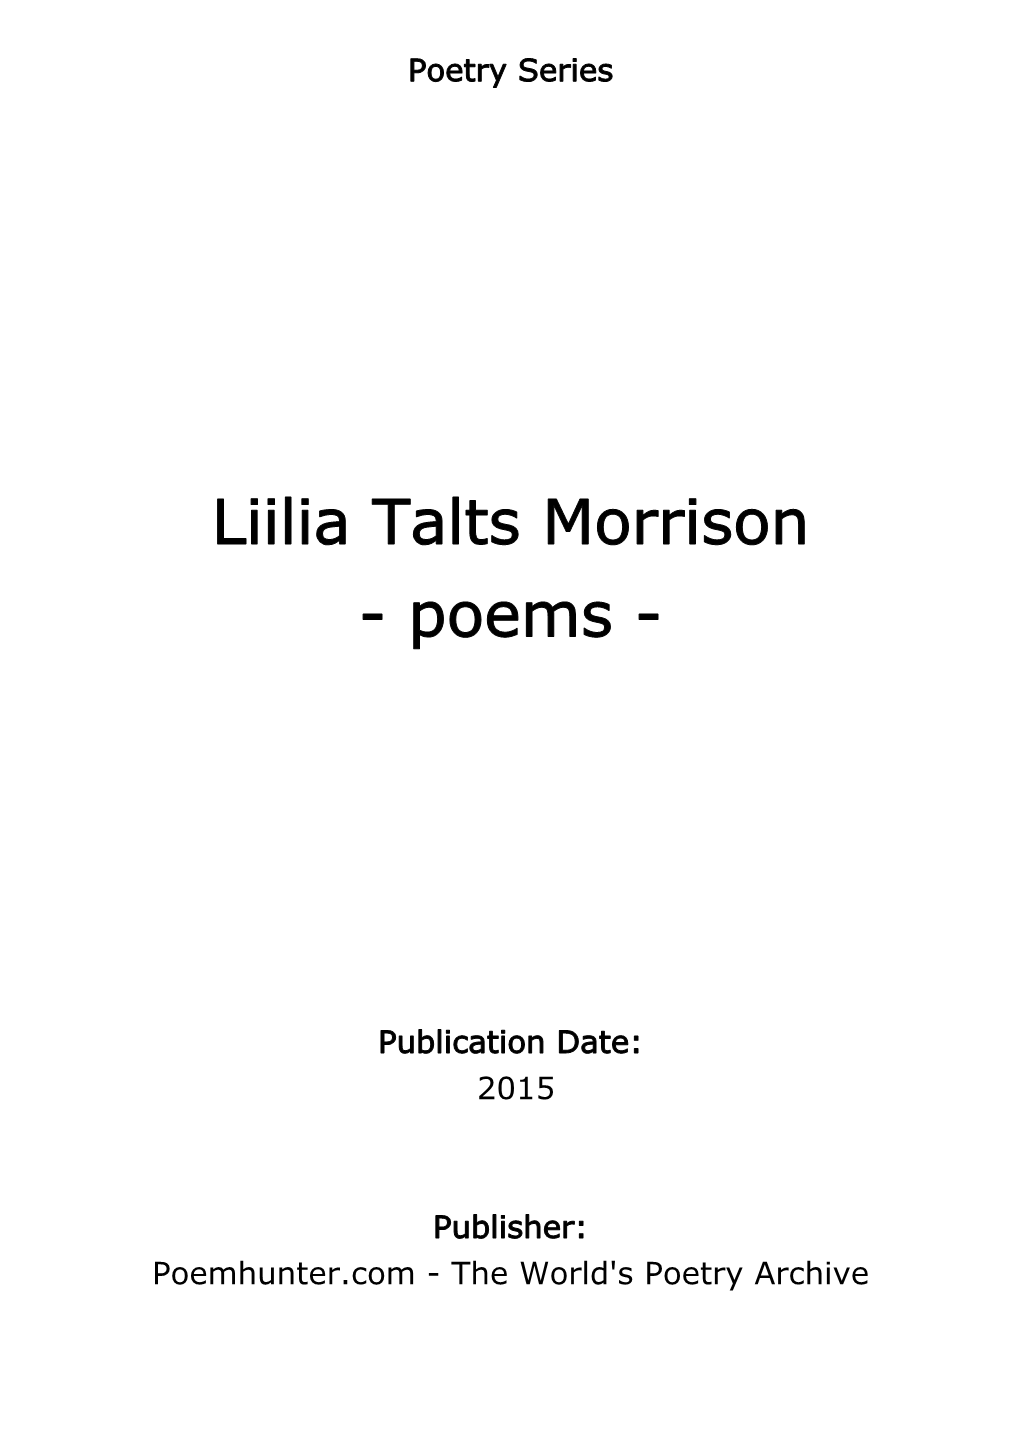 Liilia Talts Morrison - Poems